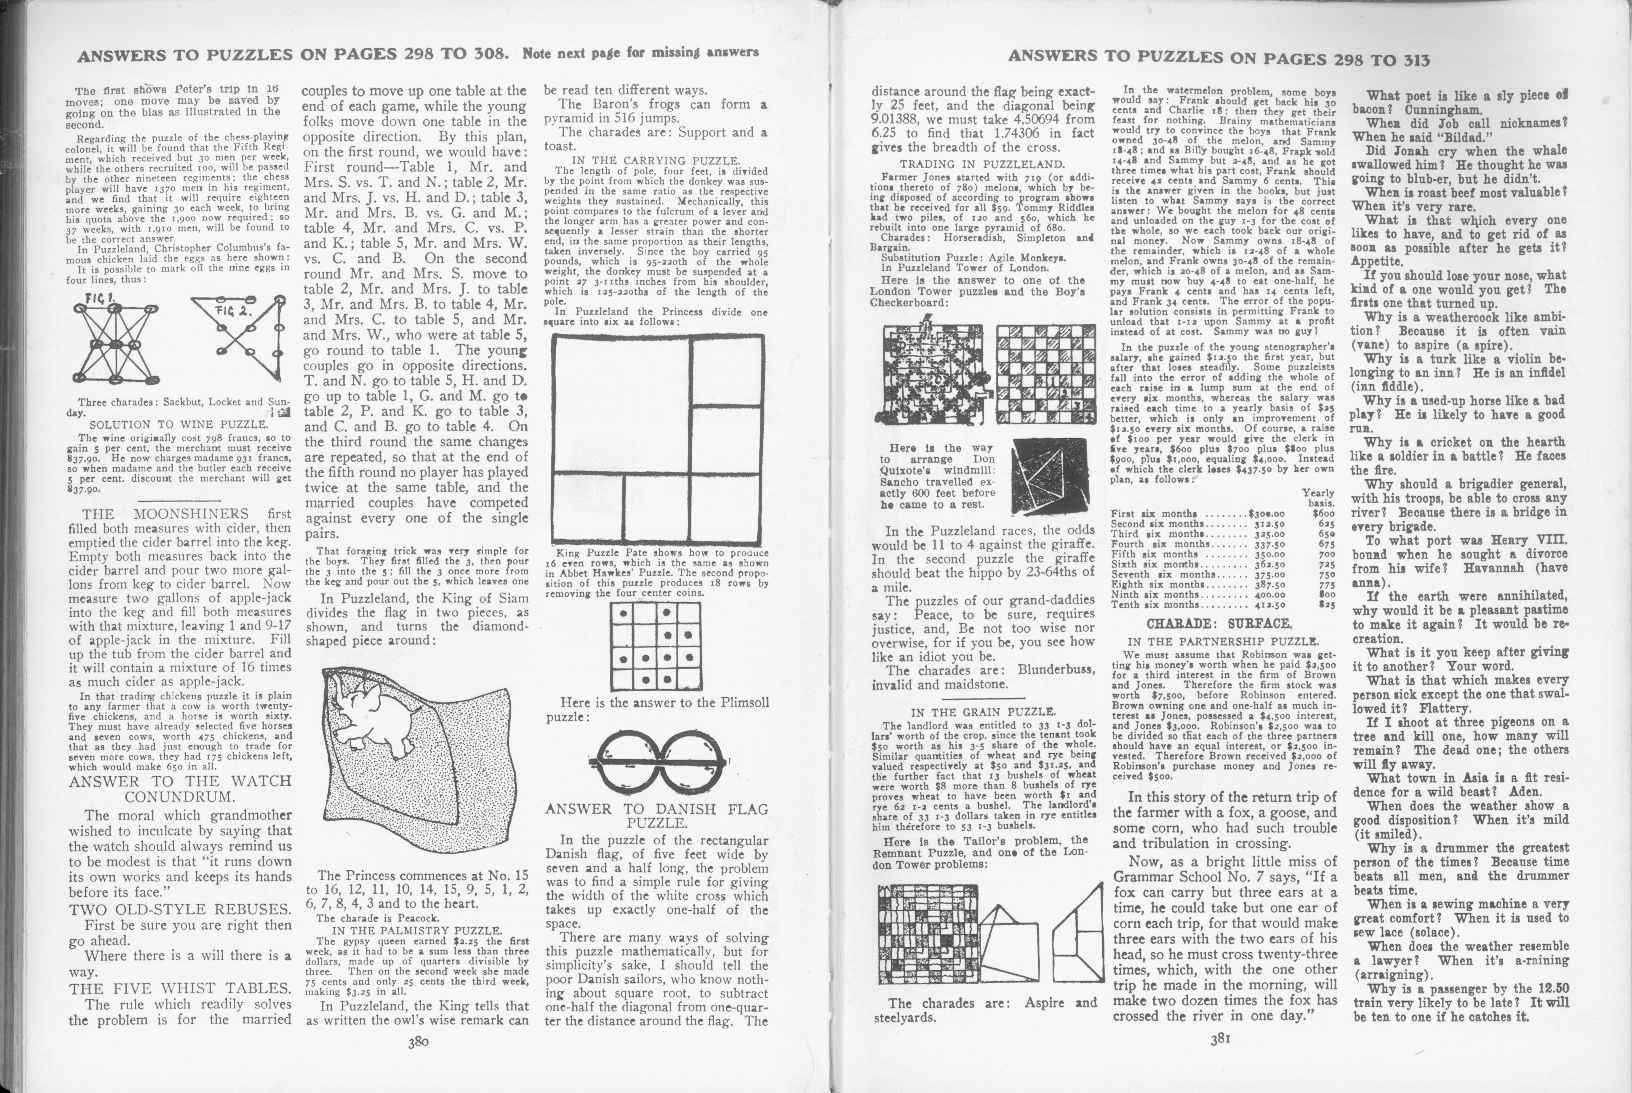 Sam Loyd - Cyclopedia of Puzzles - page 380-381